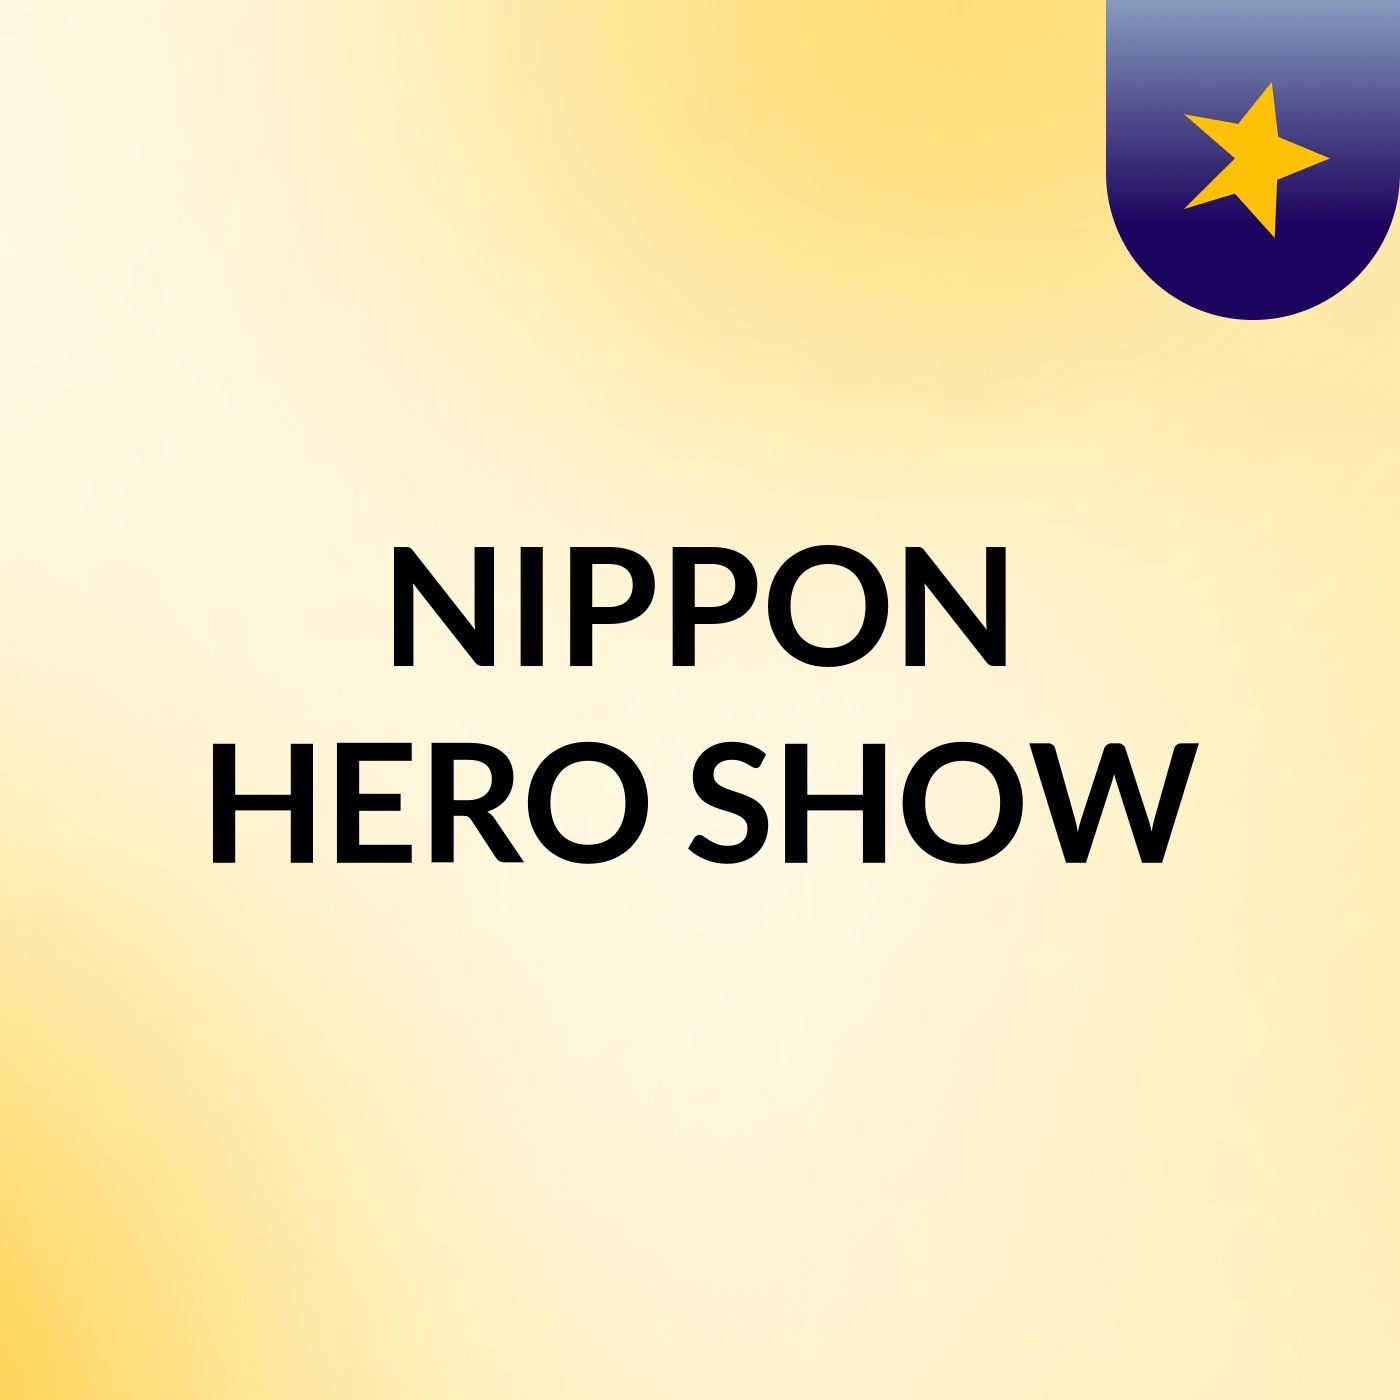 NIPPON HERO SHOW